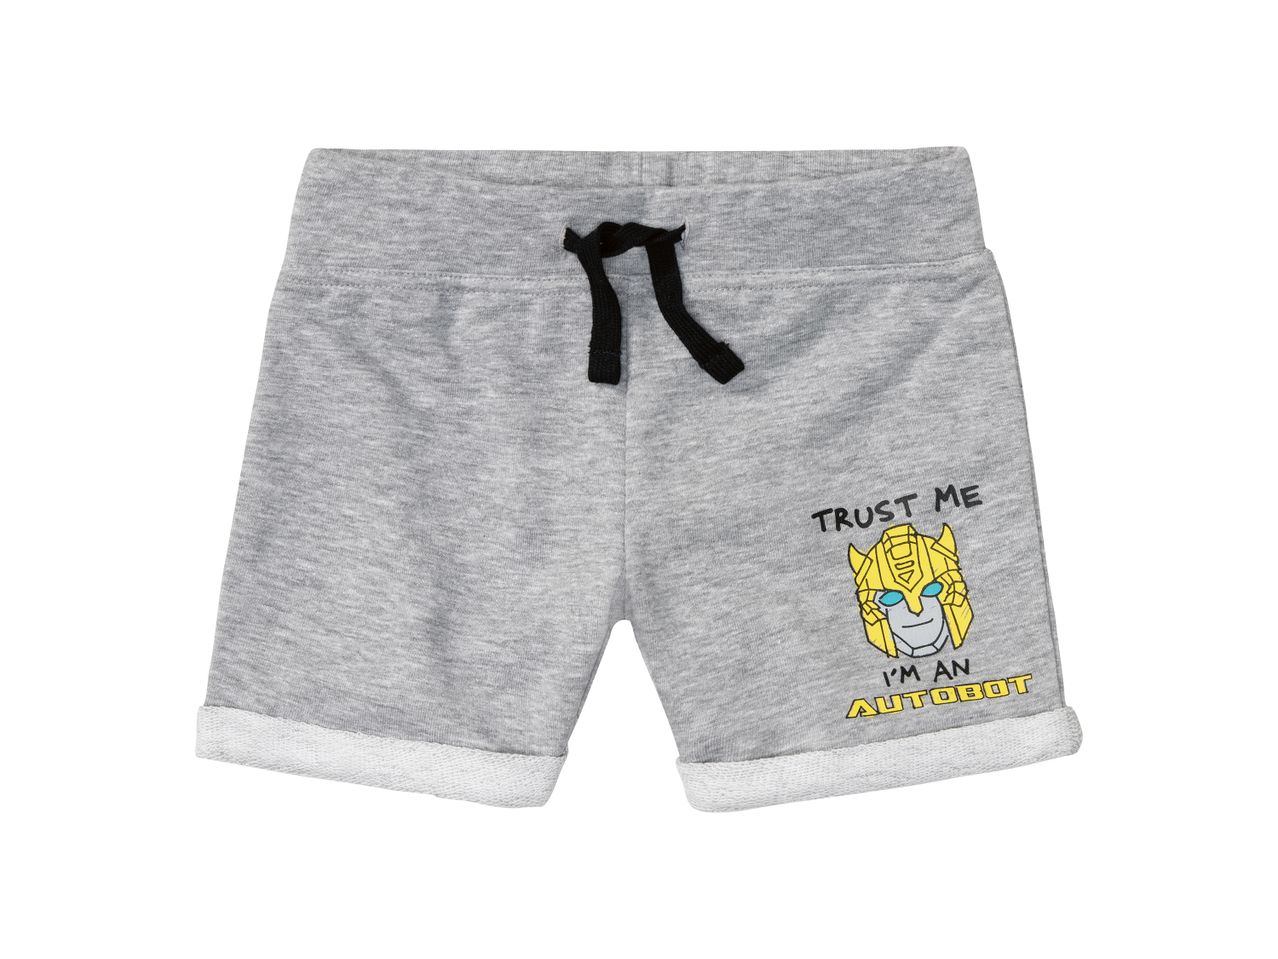 Shorts da bambino Transformers, Paw , prezzo 5.99 EUR